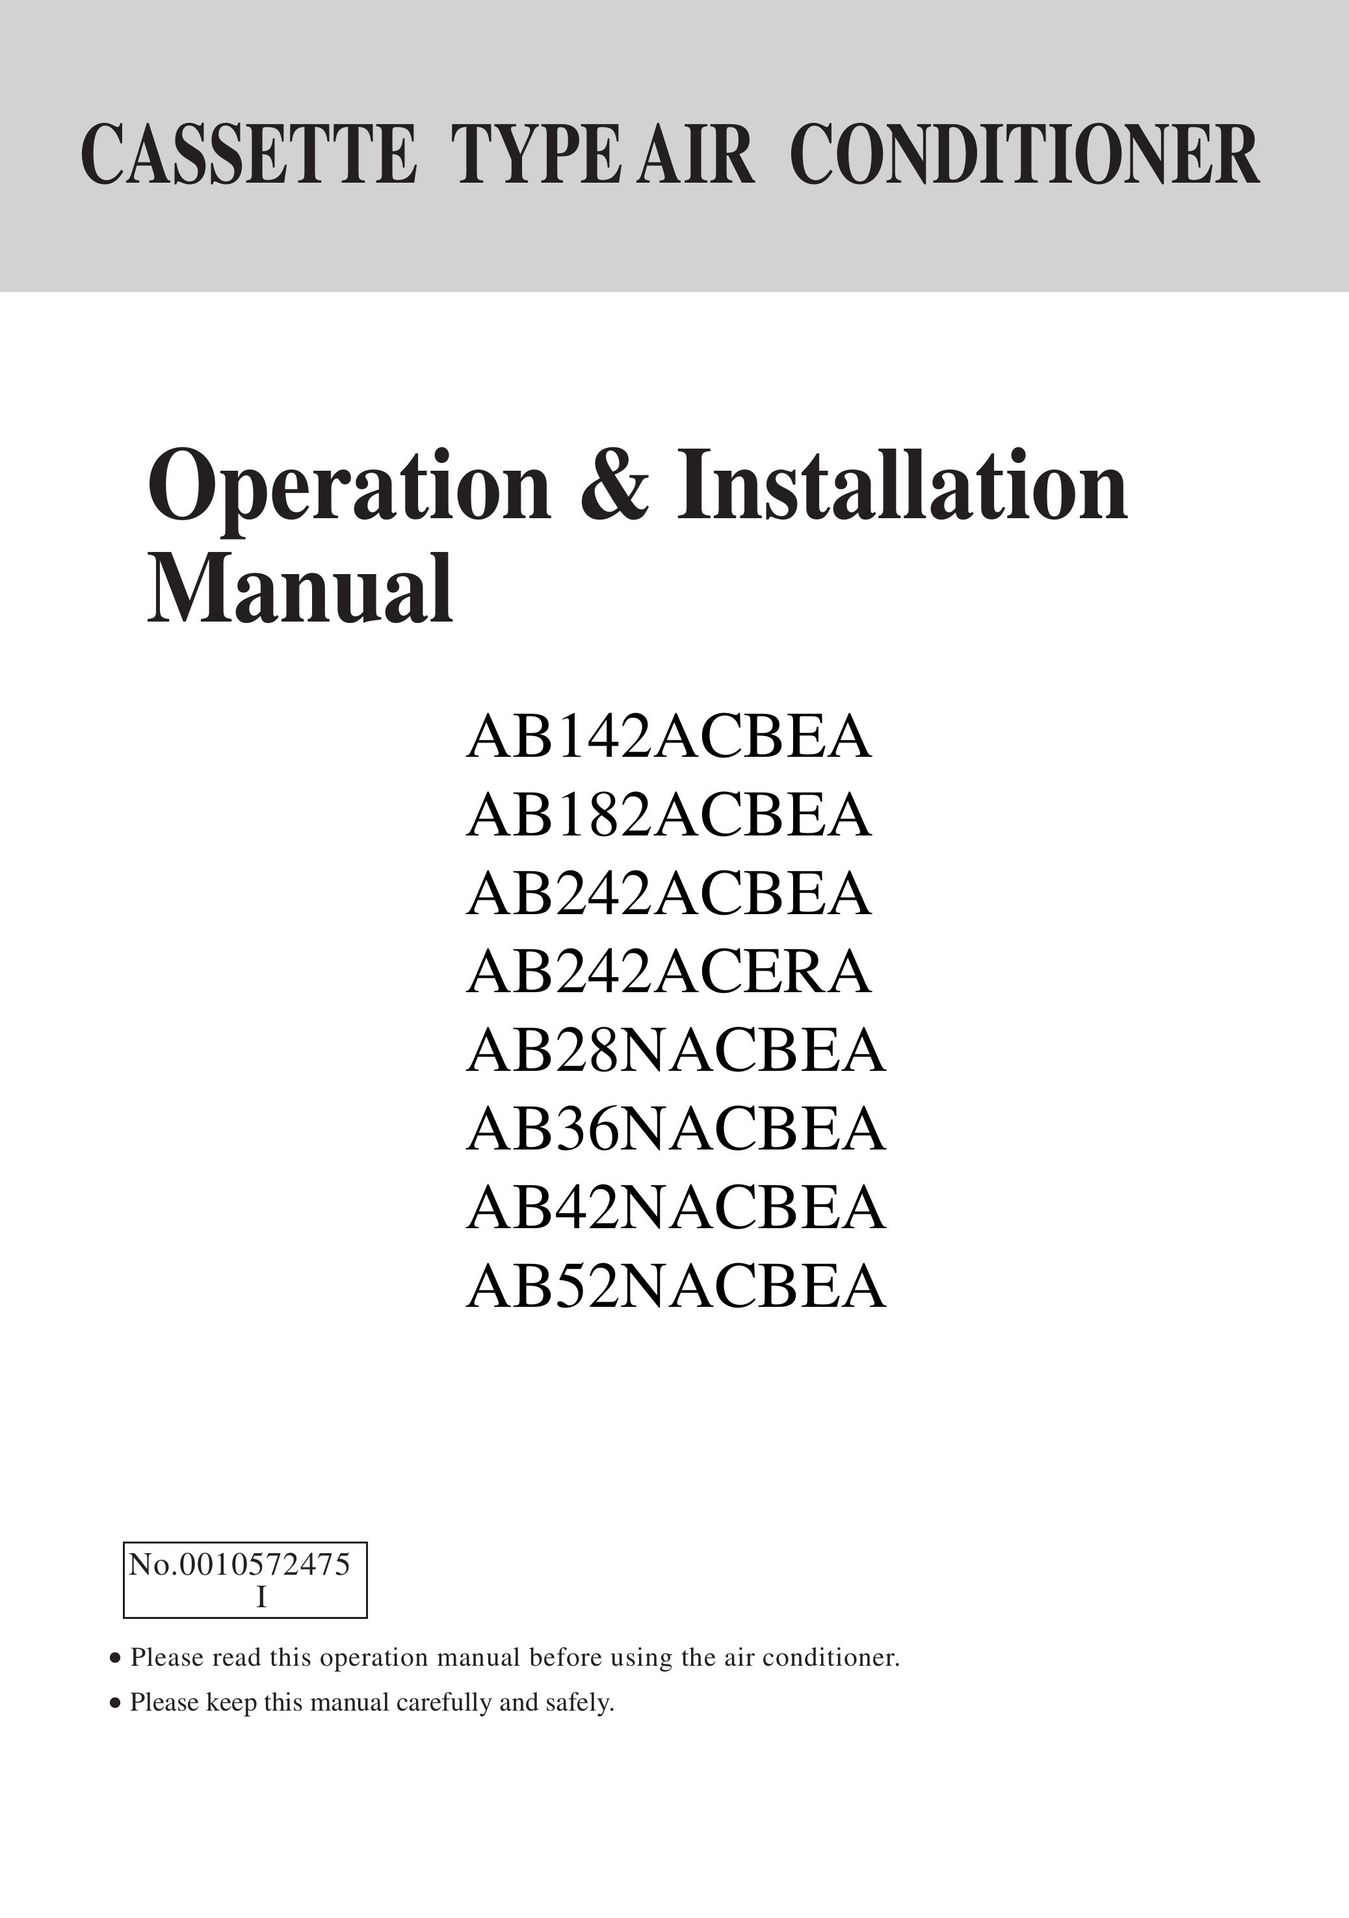 Haier AB42NACBEA Air Conditioner User Manual